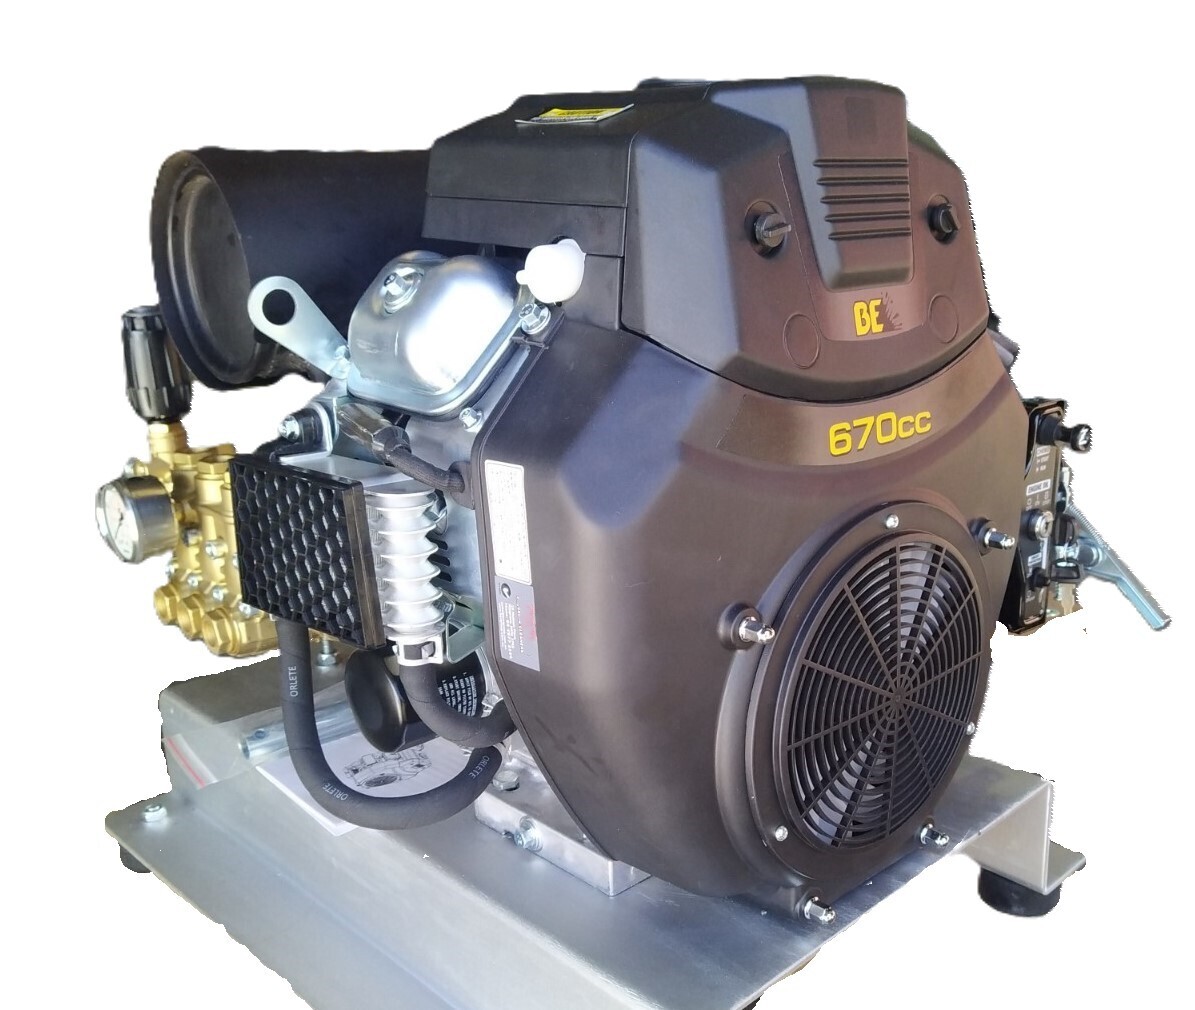 Pressure Washer Drain Cleaner 24 hp V Twin 33 Lt/min @ 3,600 PSI